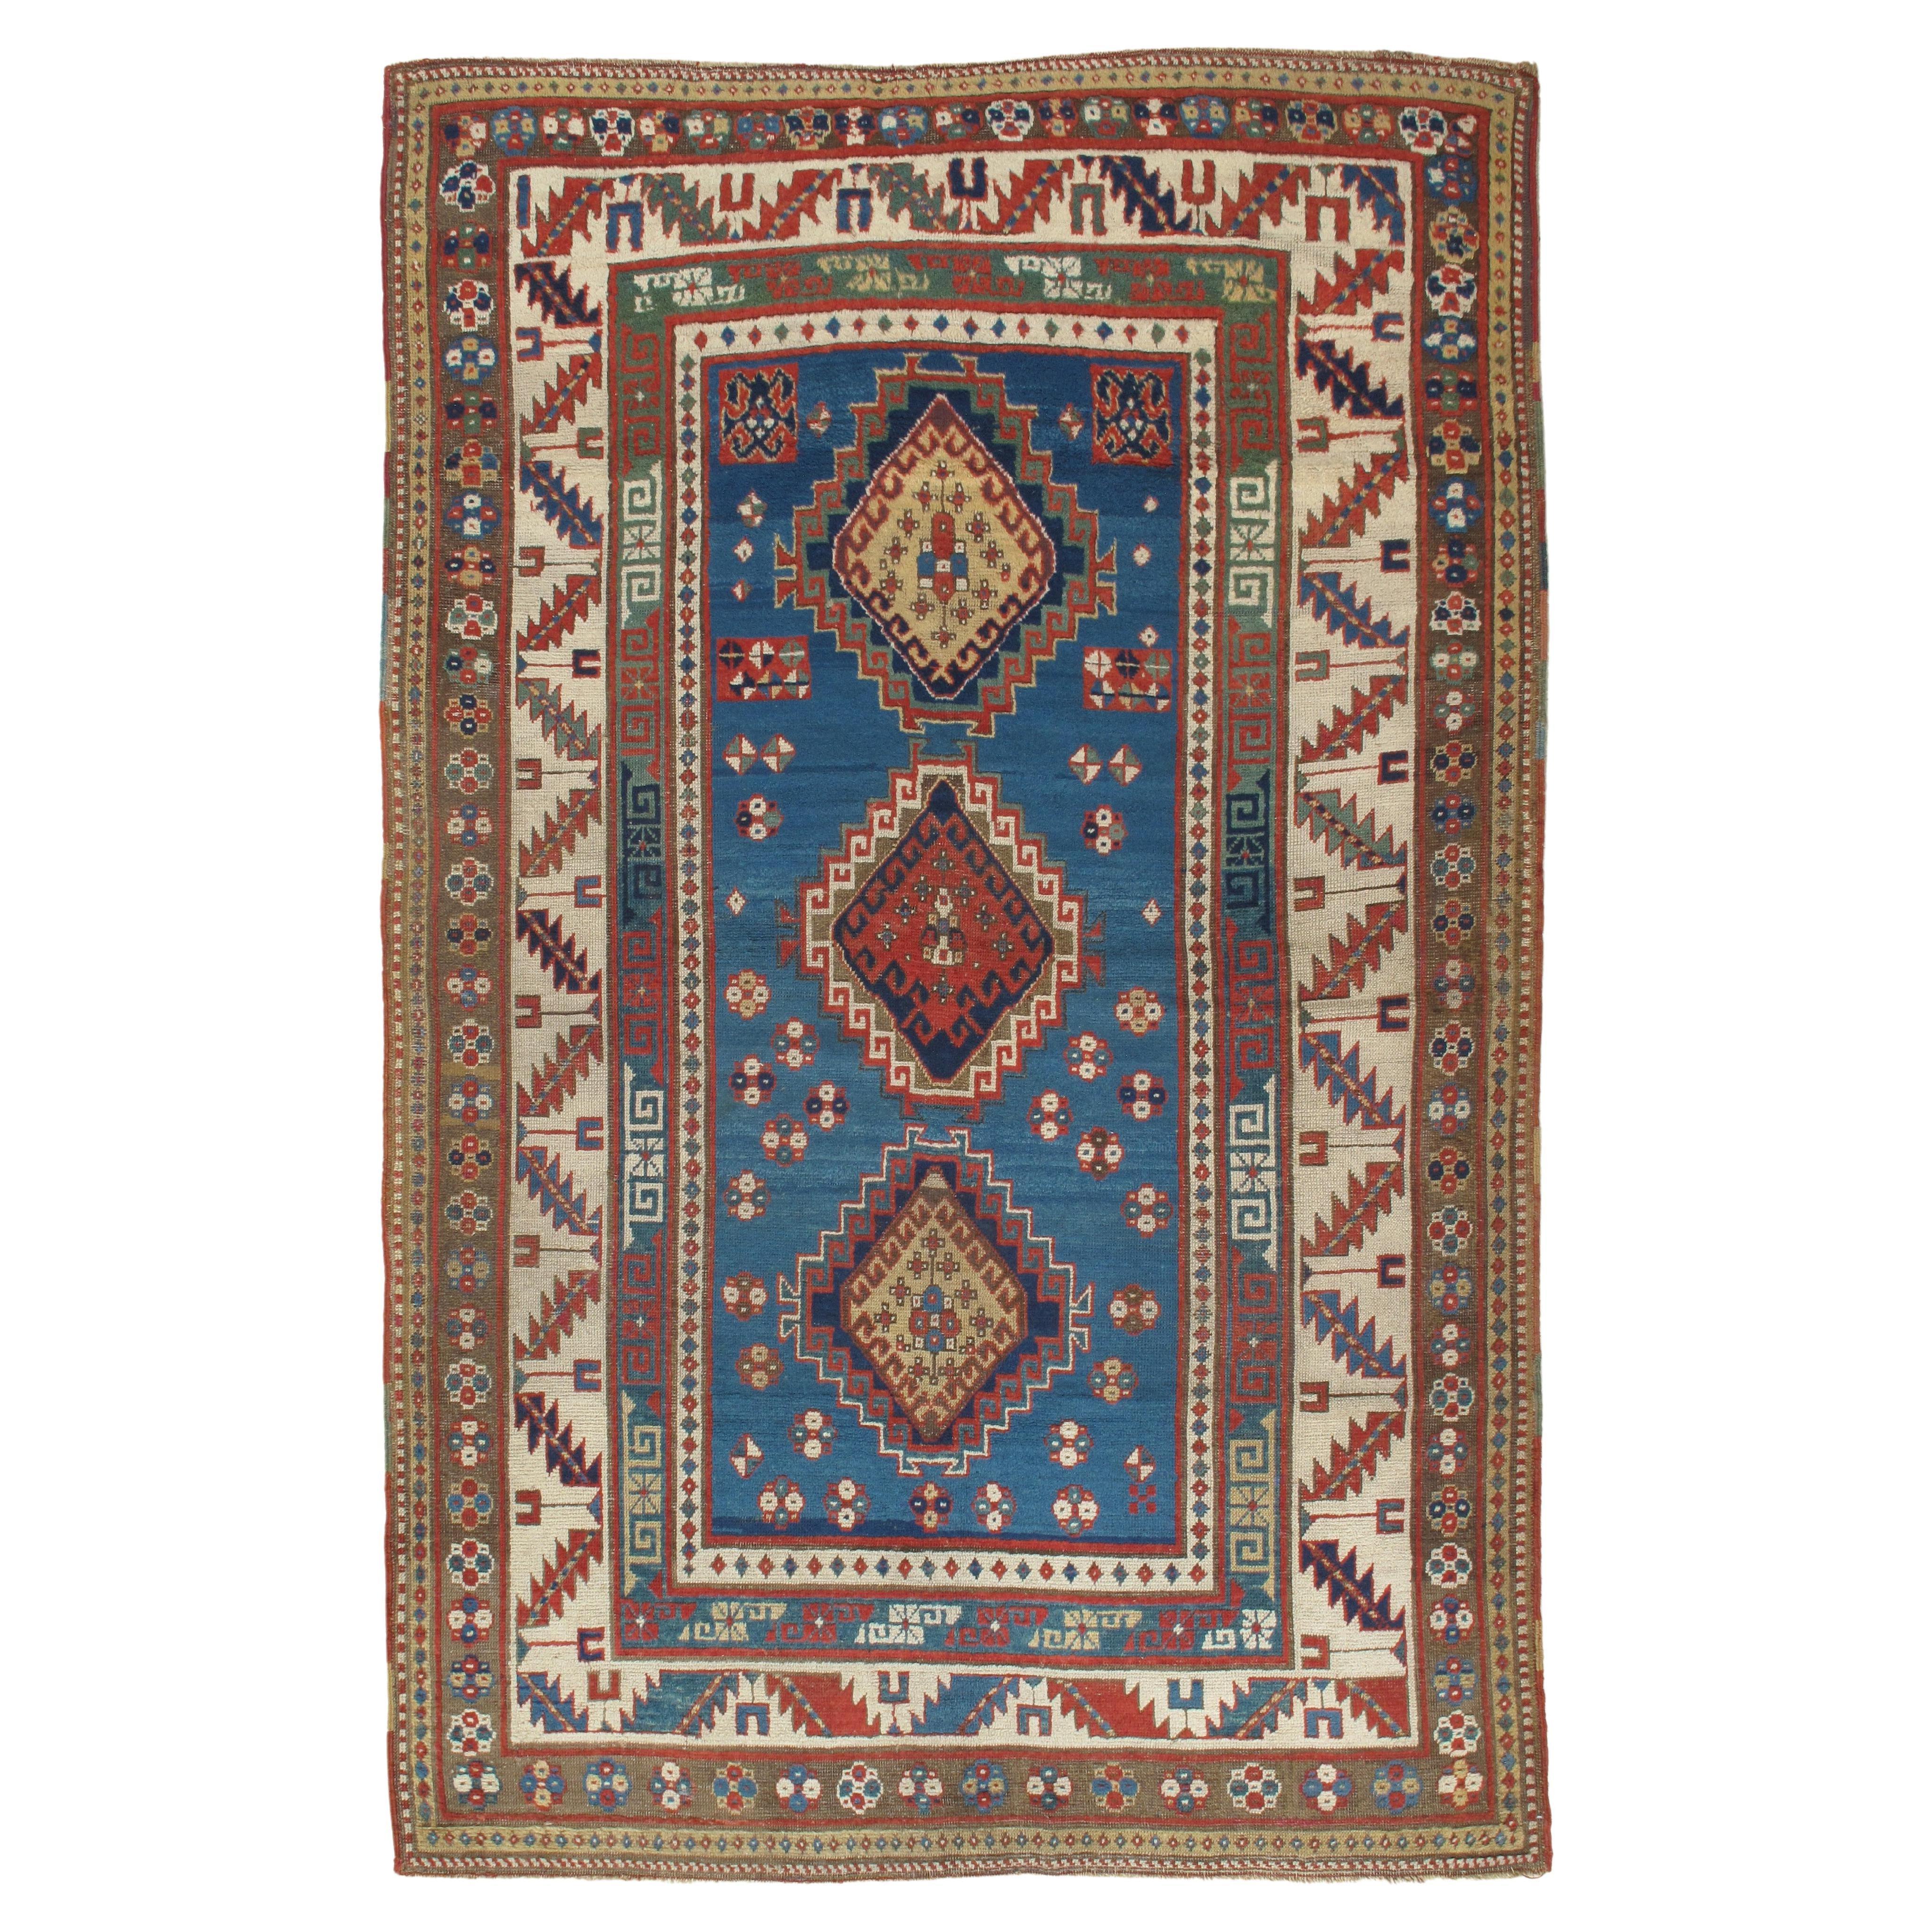 Antique Kazak Carpet, Handmade Wool, Rust, Ivory, Navy, Light Blue and Gold For Sale